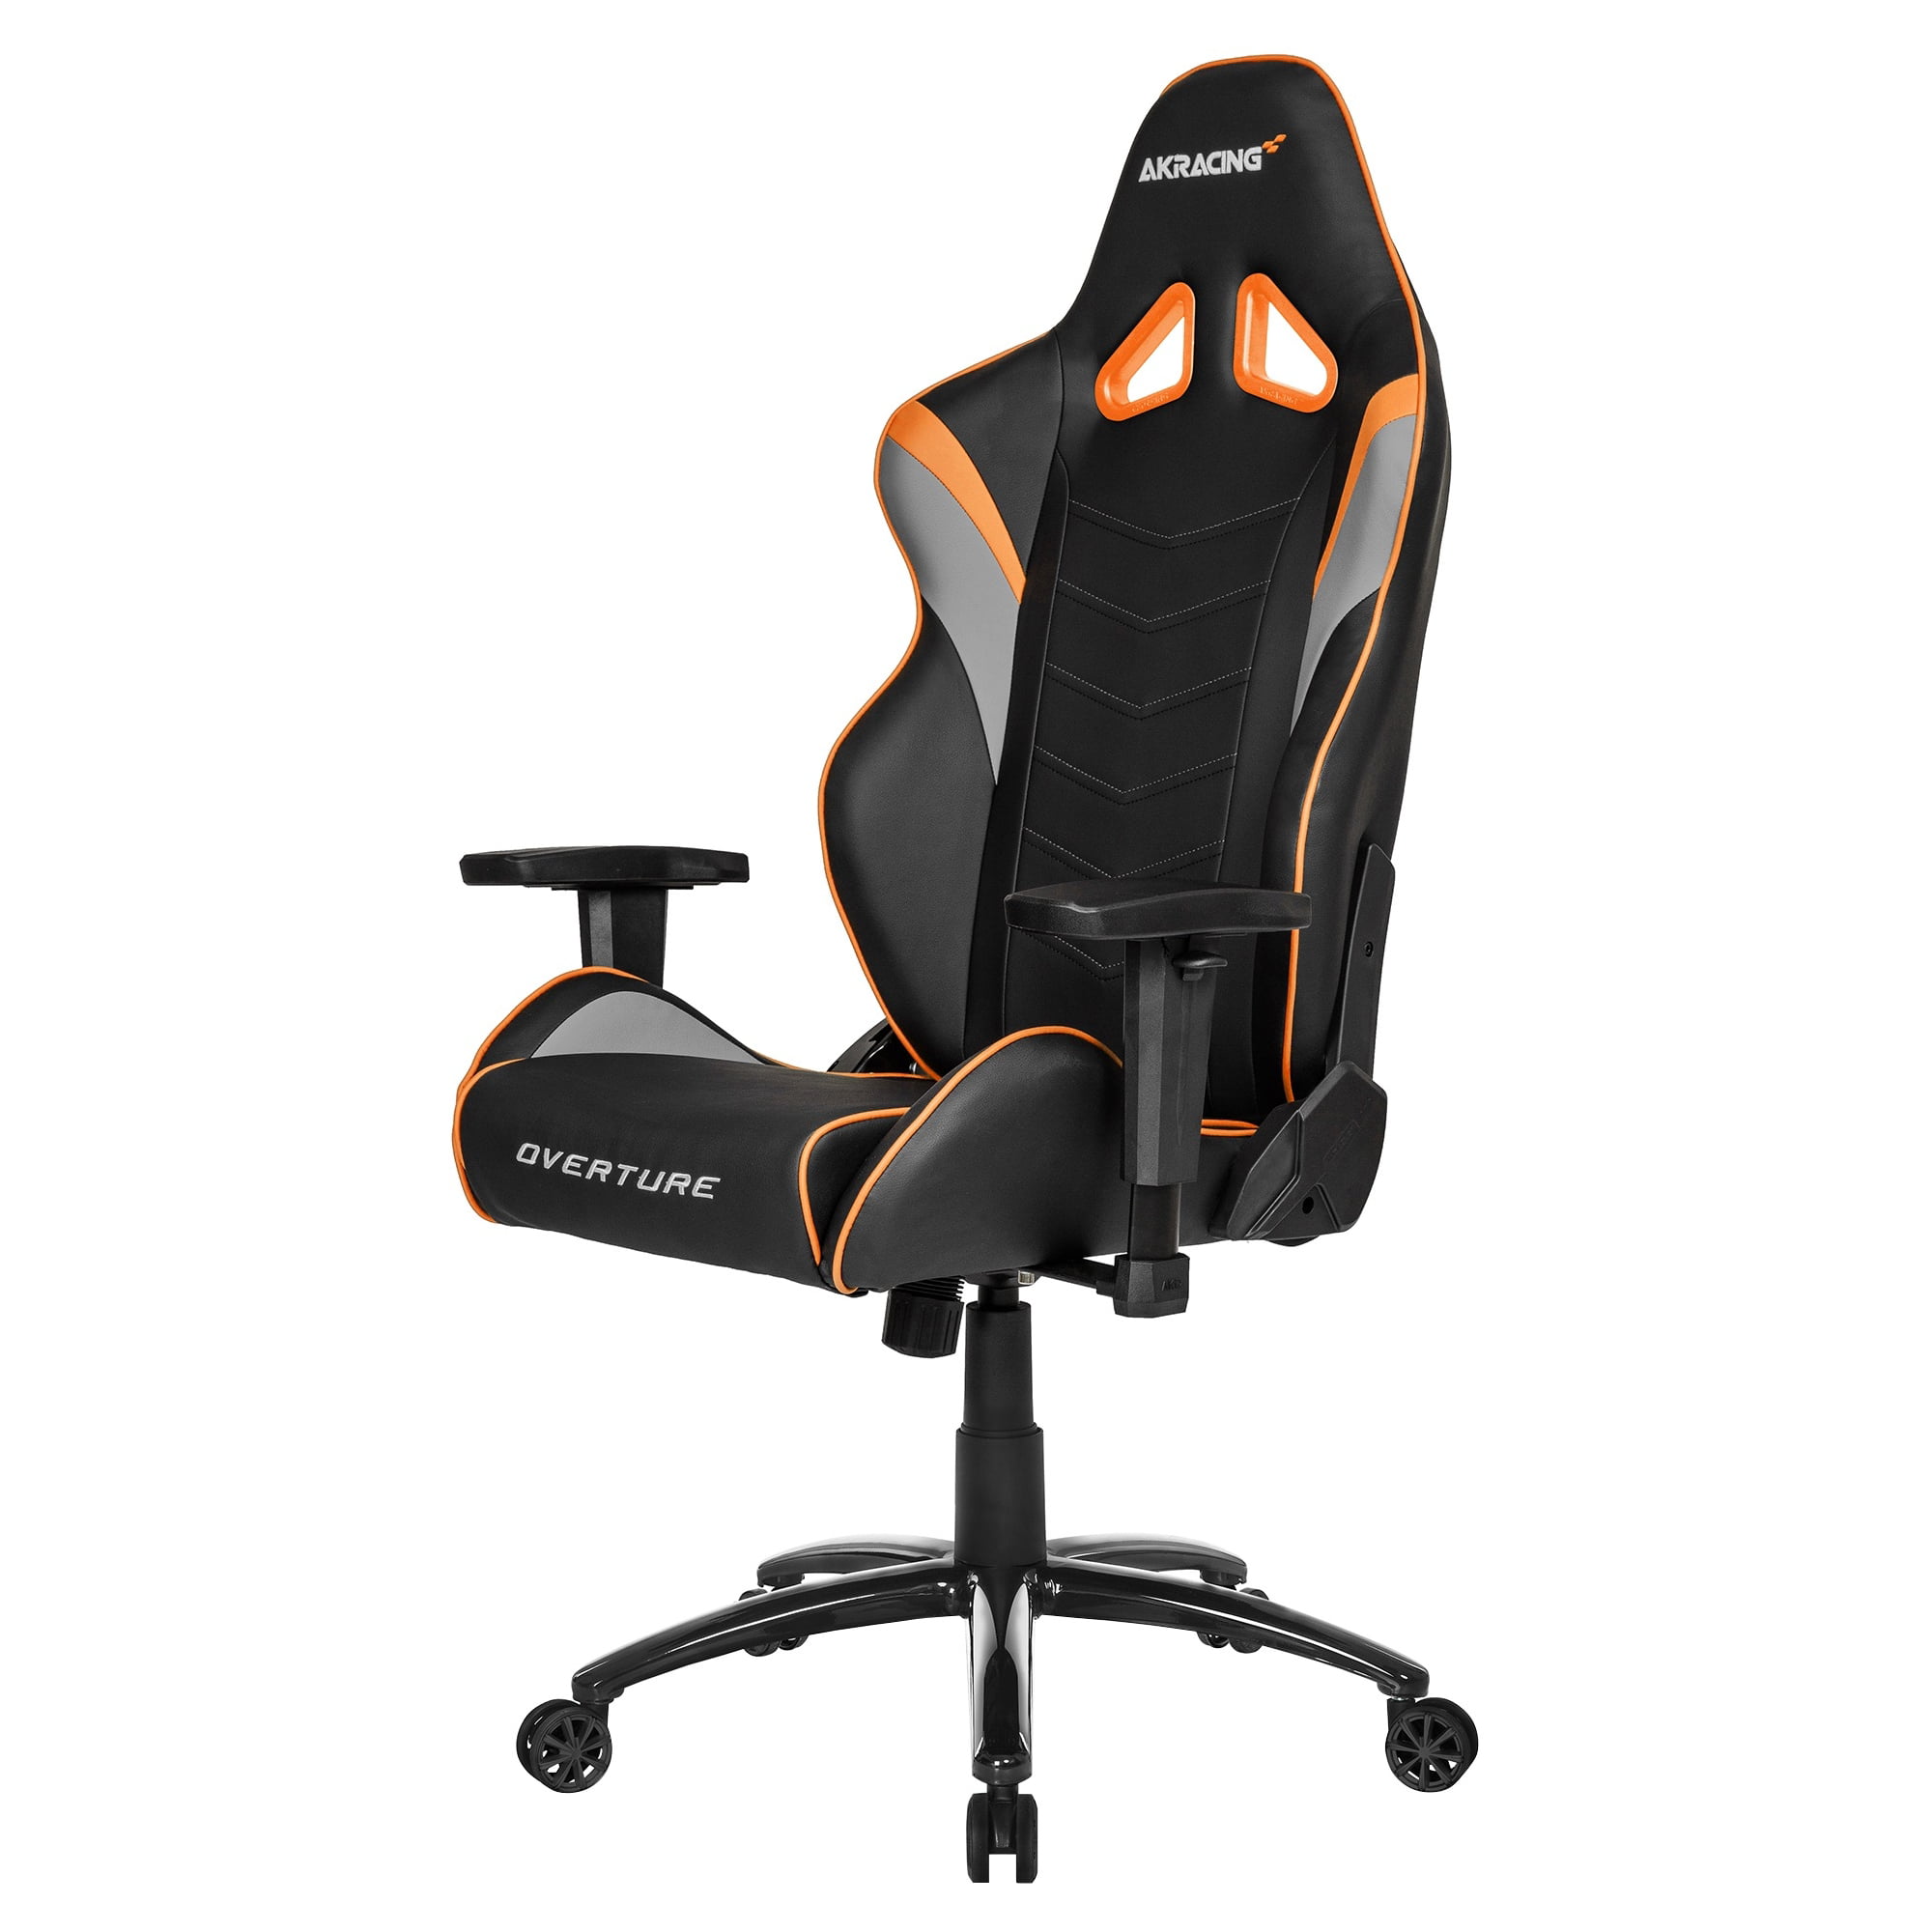 AKRacing Overture Gaming Chair, Orange